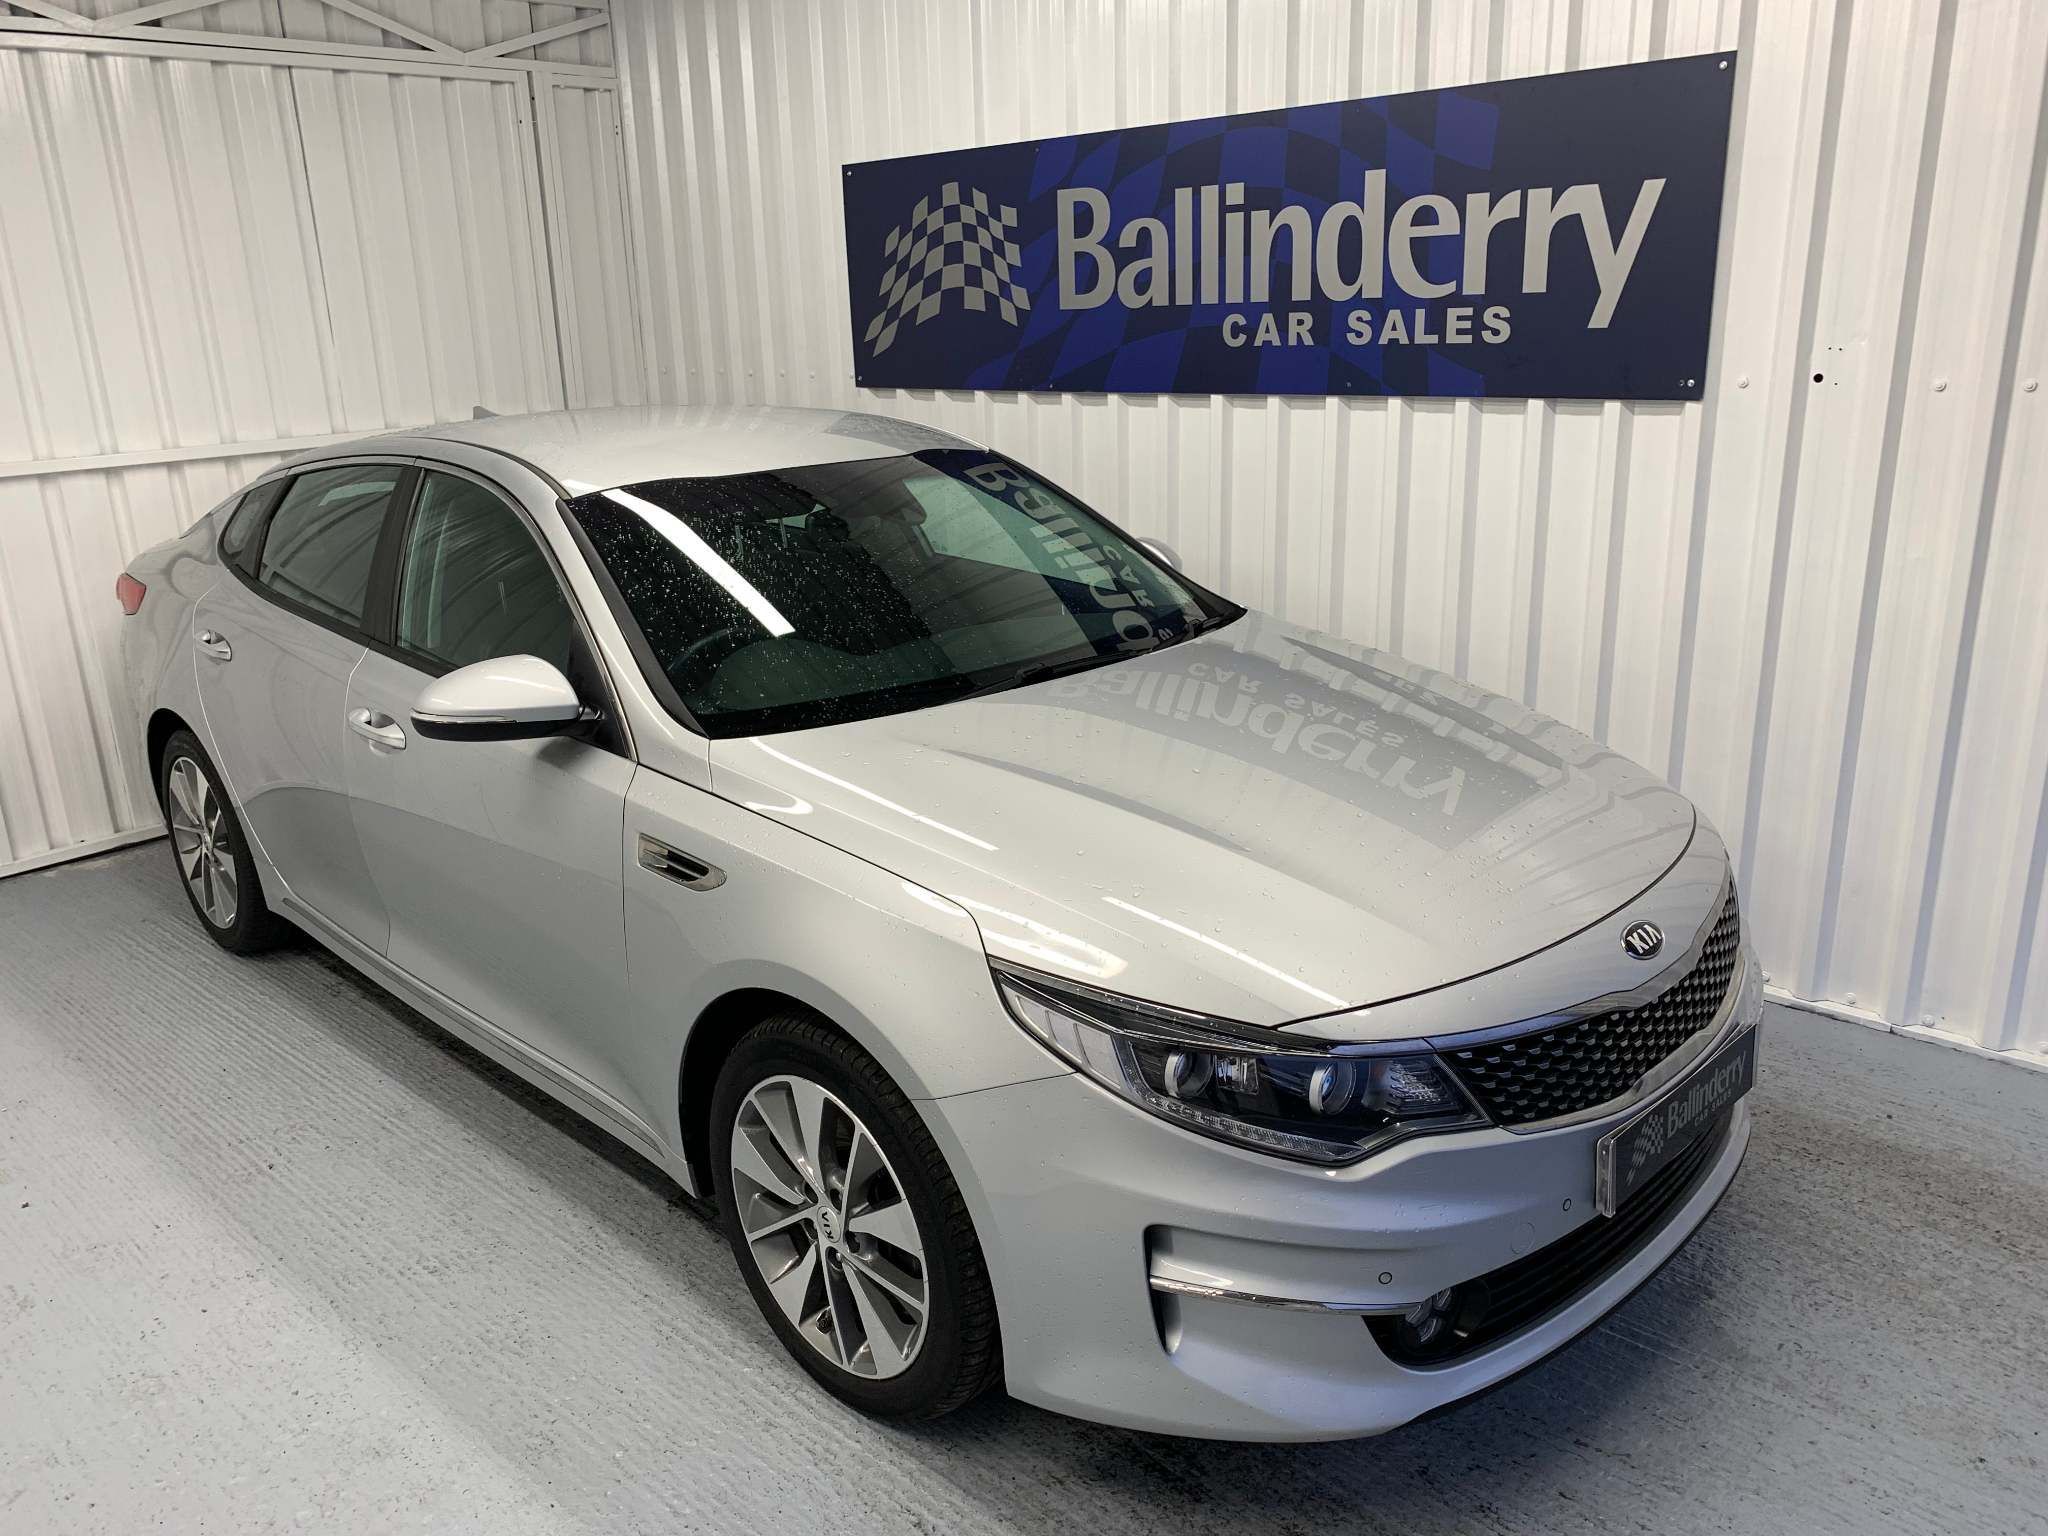 Ballinderry car sales